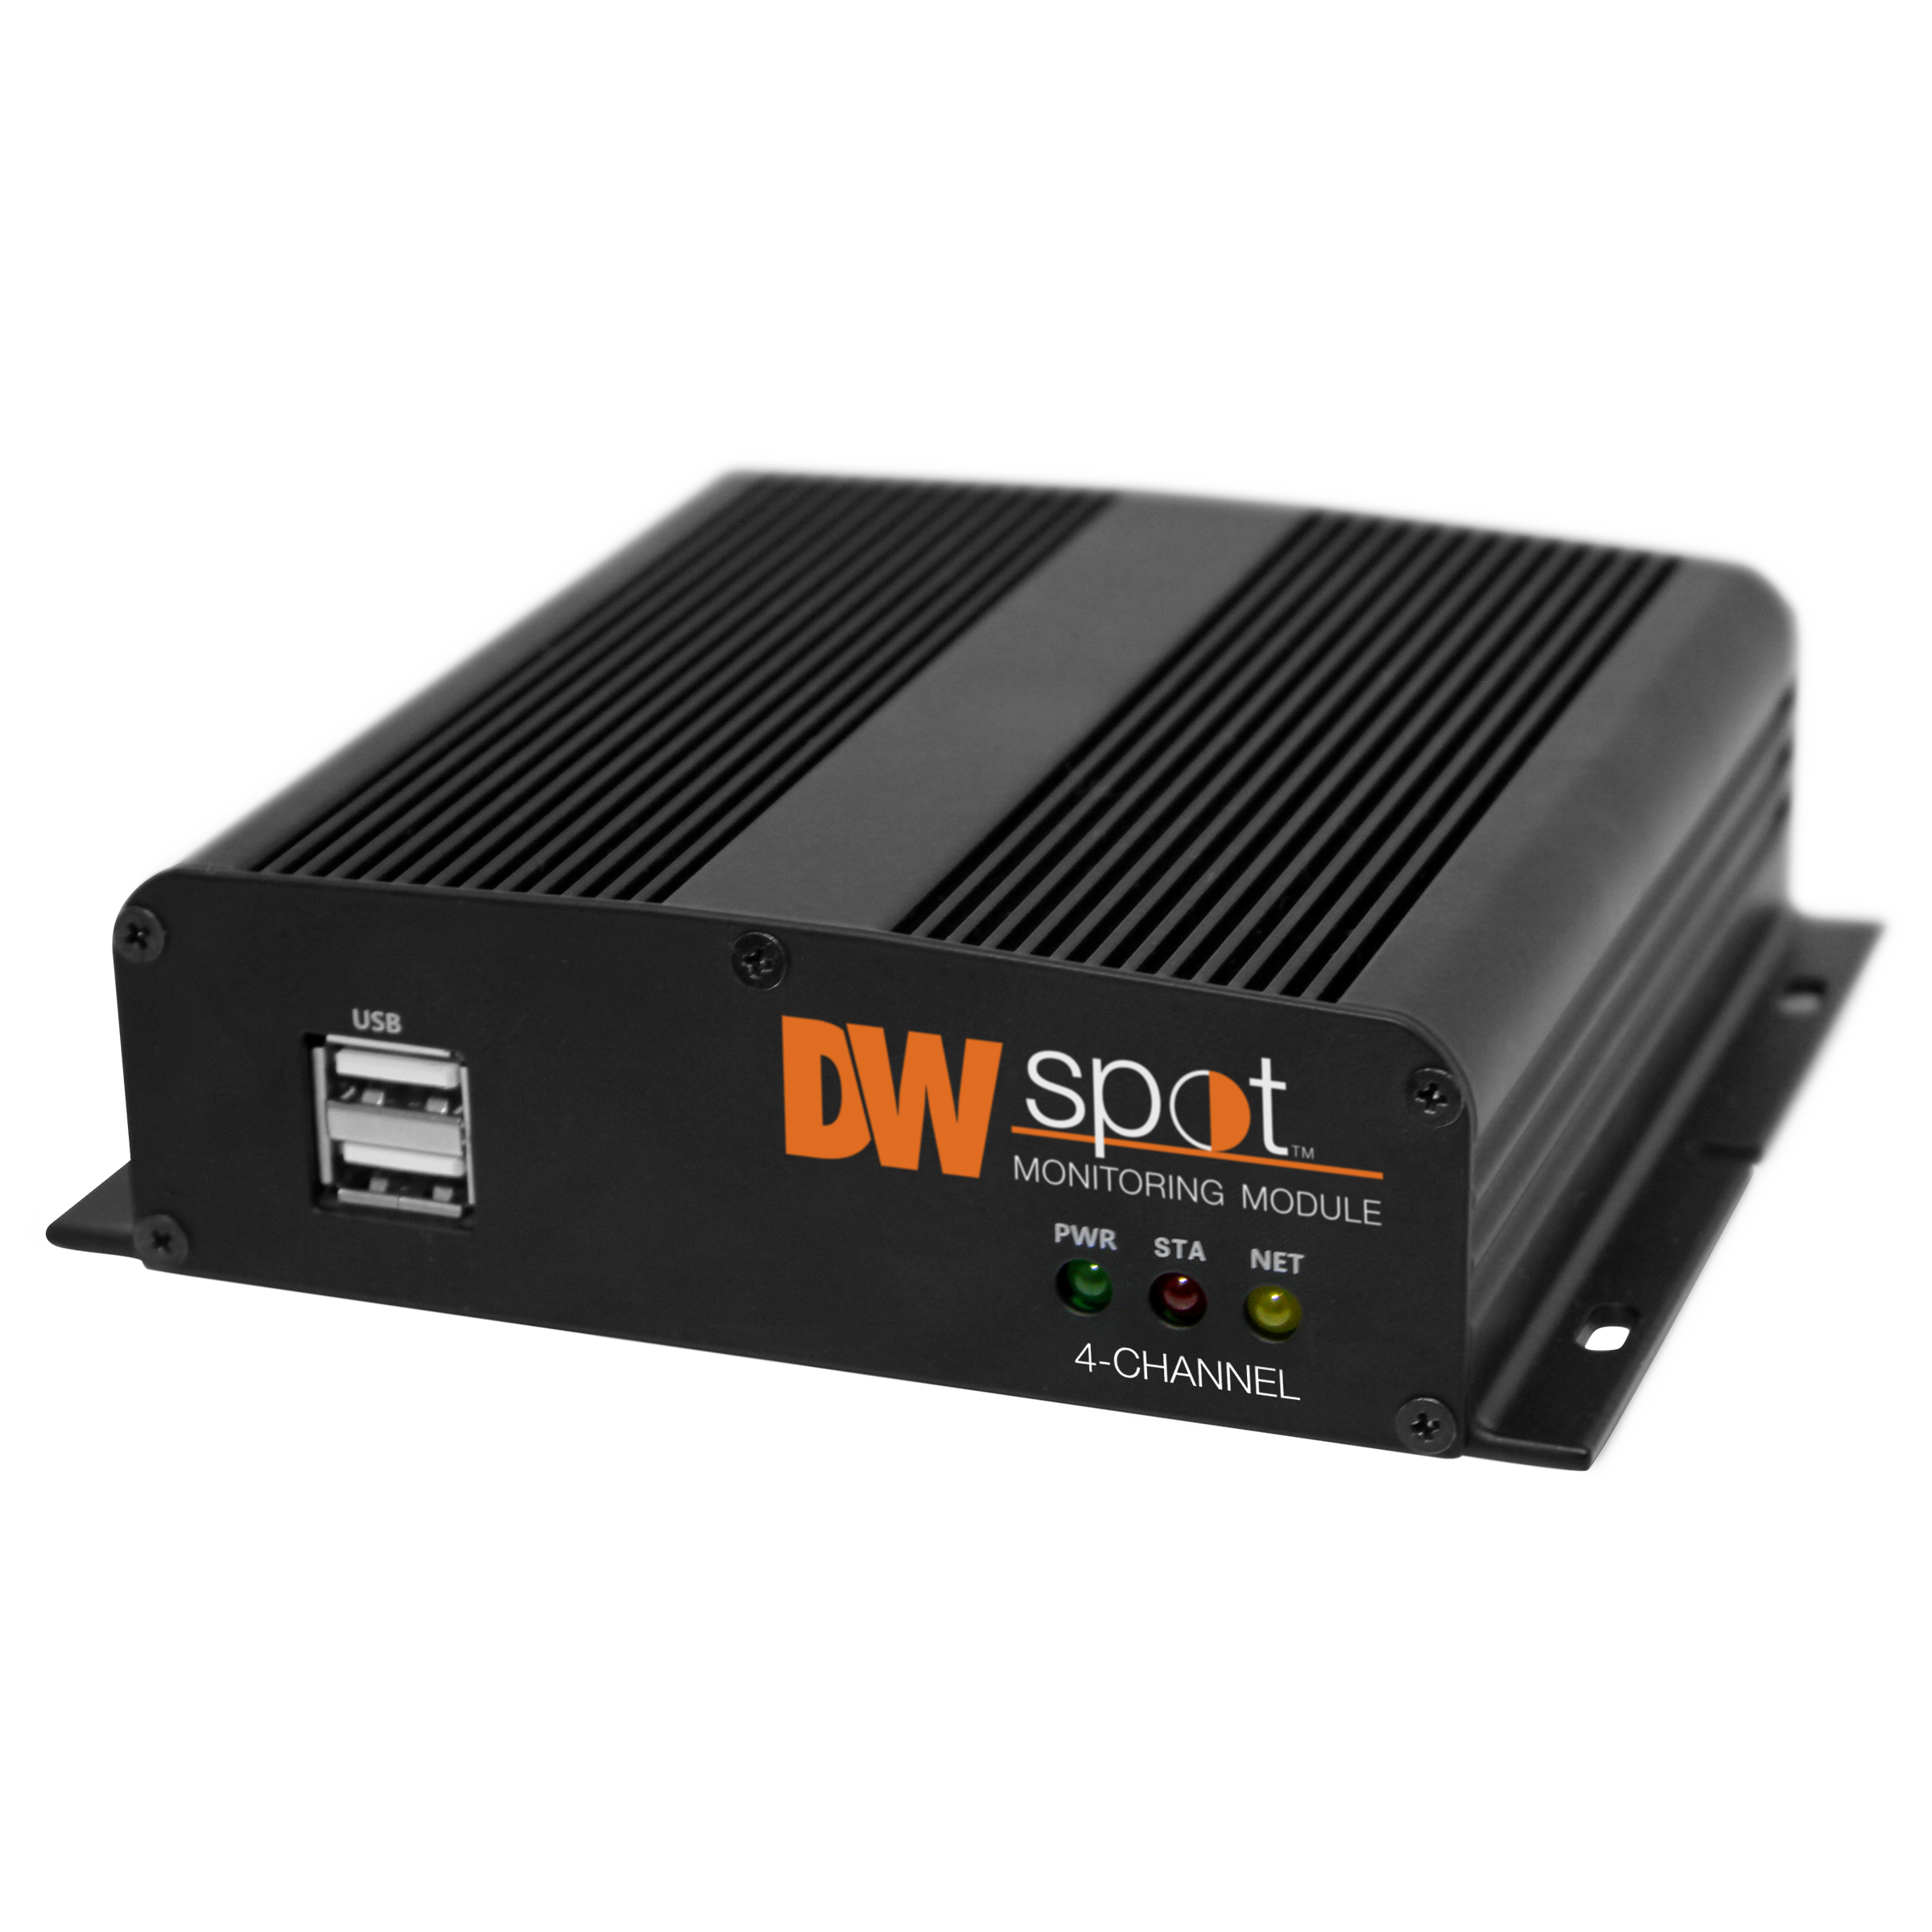 4-channel DW Spot monitoring module